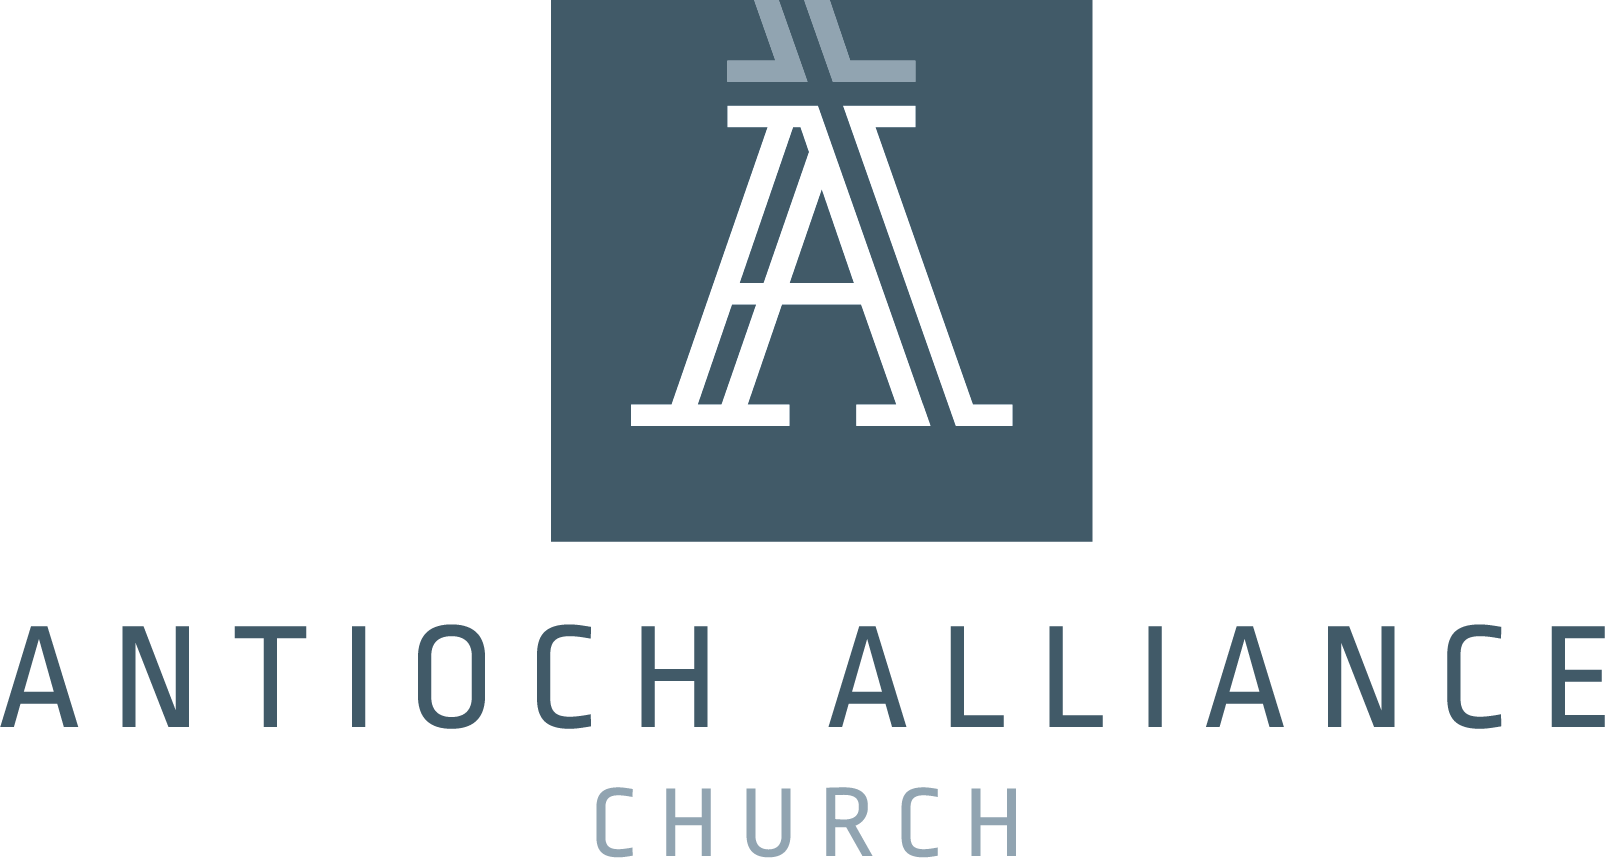 Antioch Alliance Church